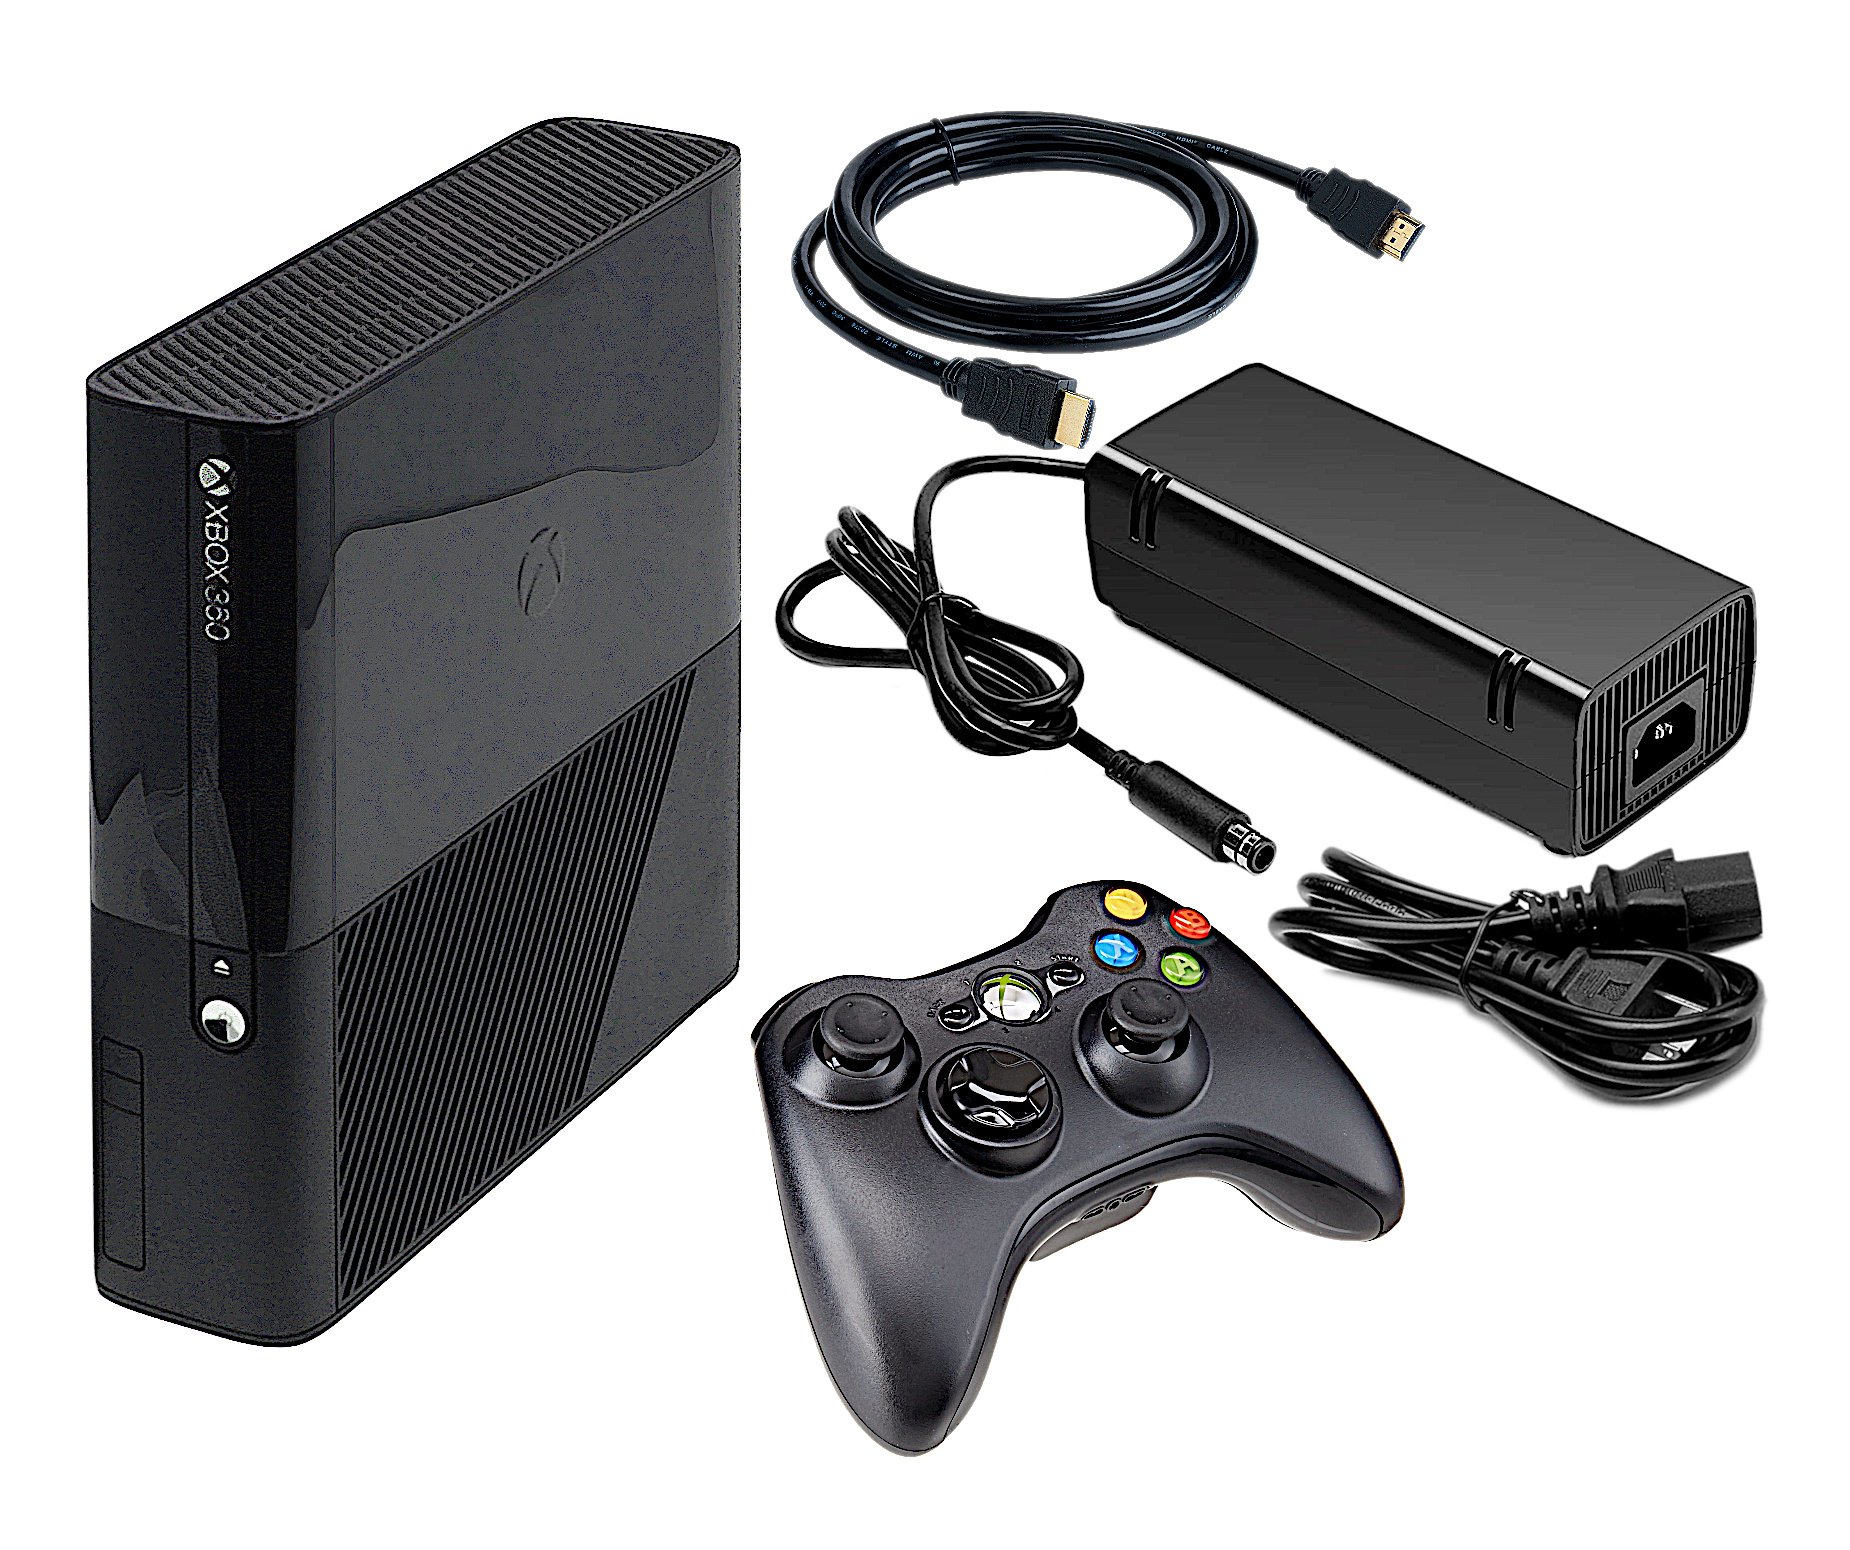 Isoleren Terminal Oeps Authentic Xbox 360 Console System Black E + 4GB 250GB 500GB + US Seller |  eBay